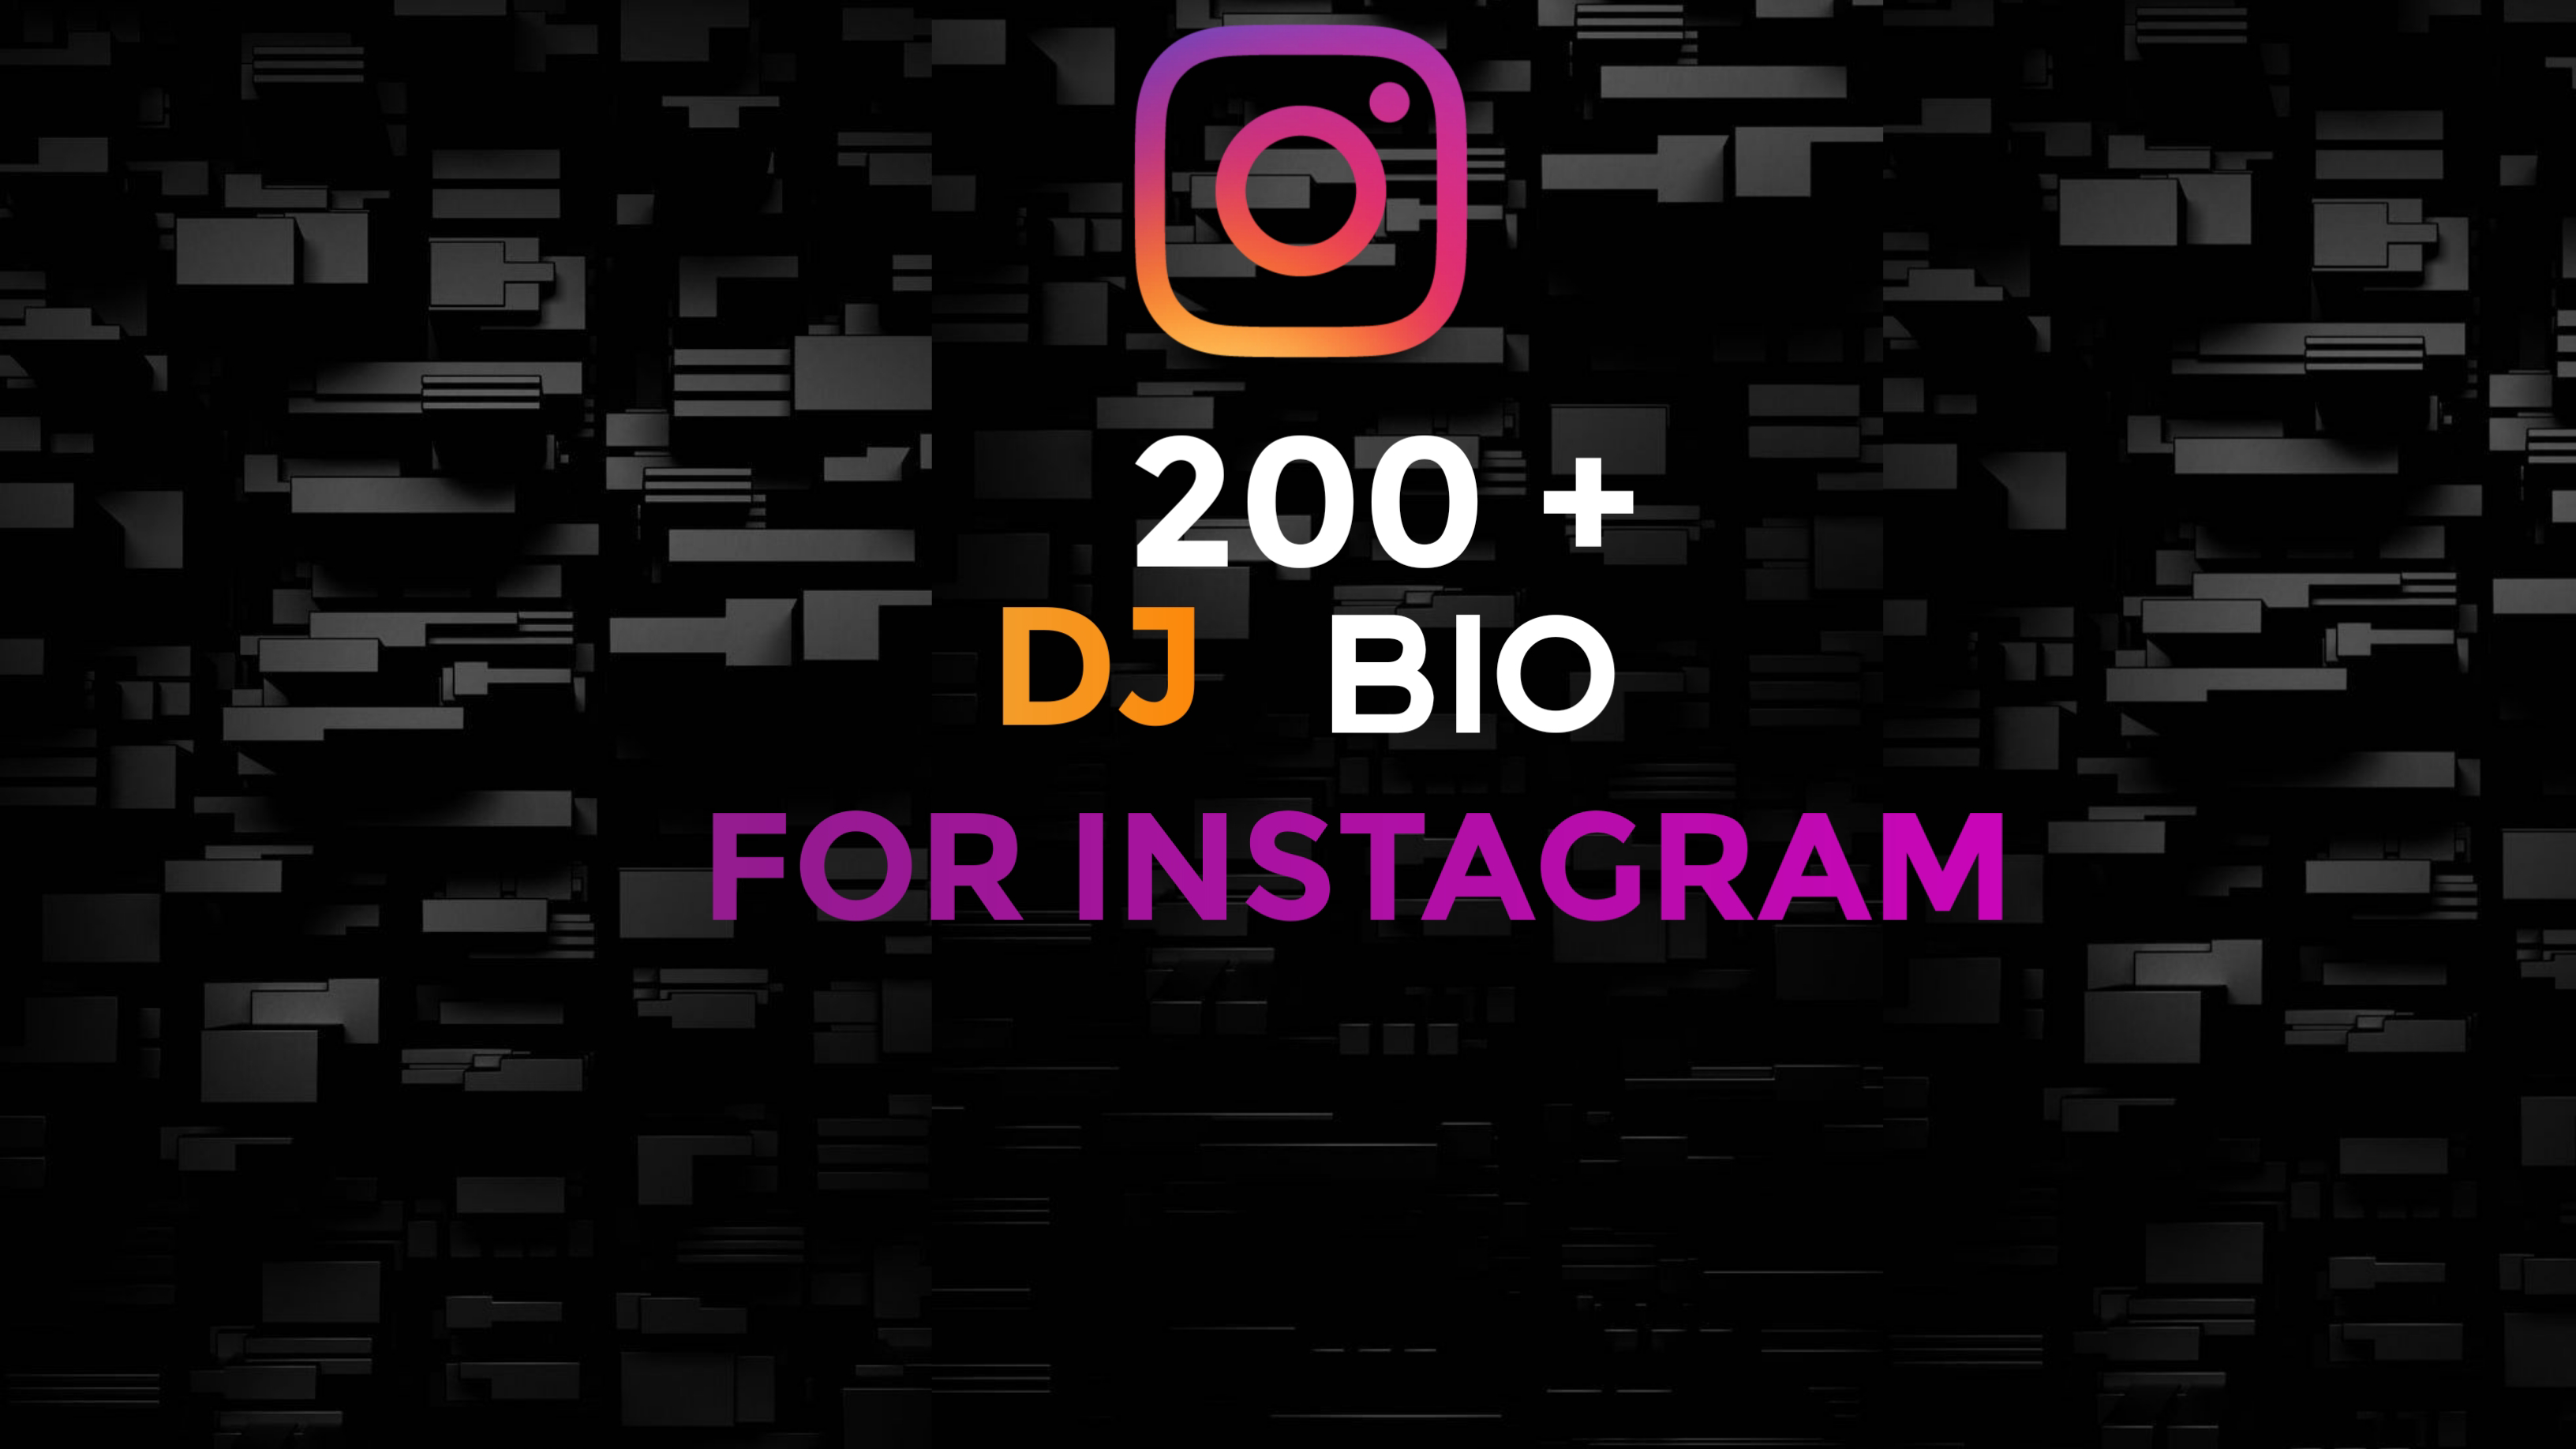 200 + Super Cool Dj Bio For Instagram To Get More Follower